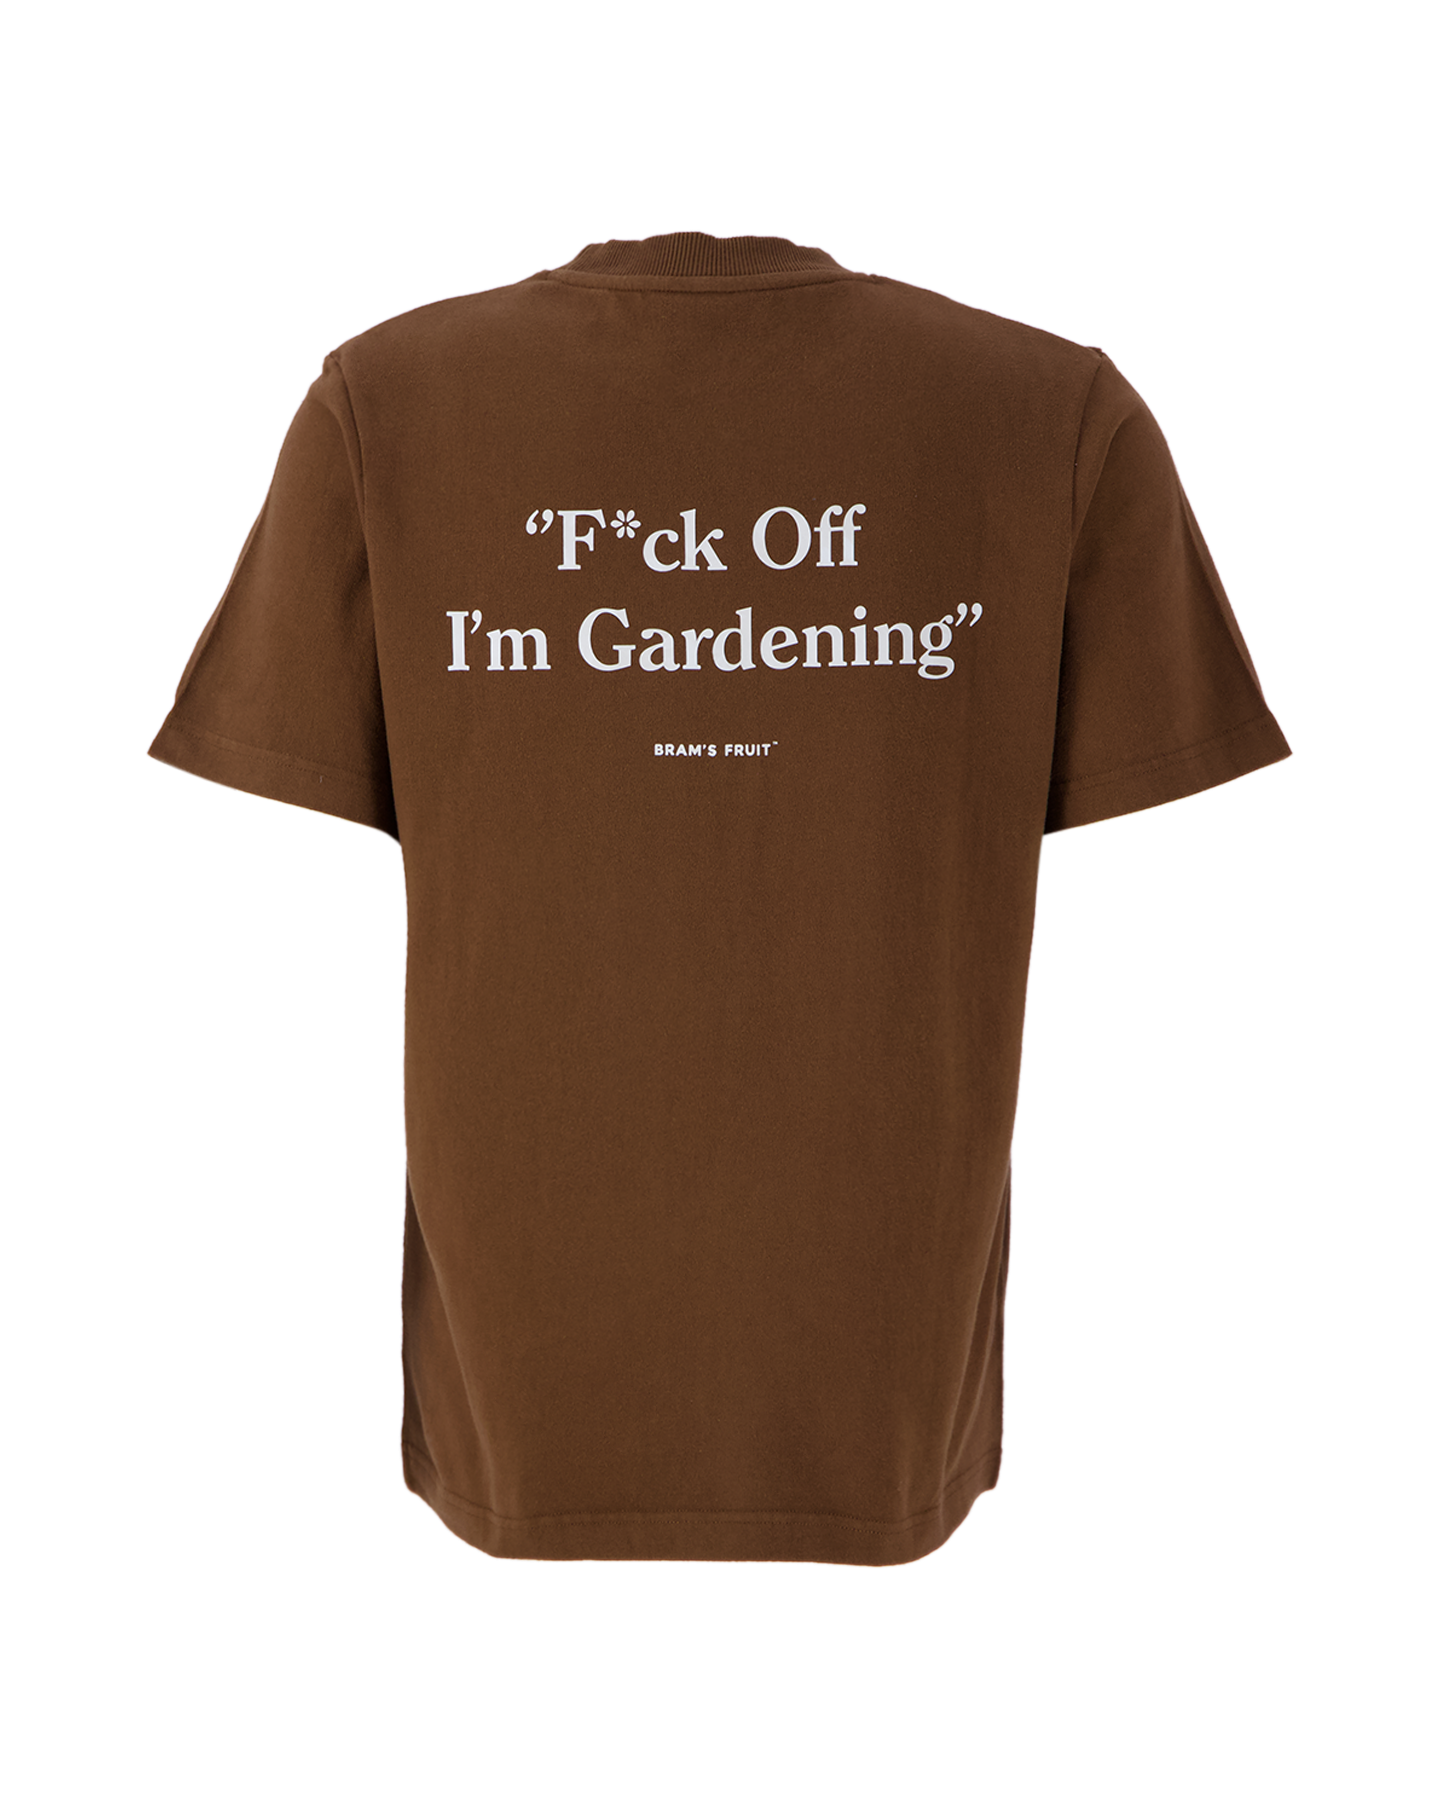 Brams Fruit F*ck Off I'm Gardening T shirt BRUIN 1